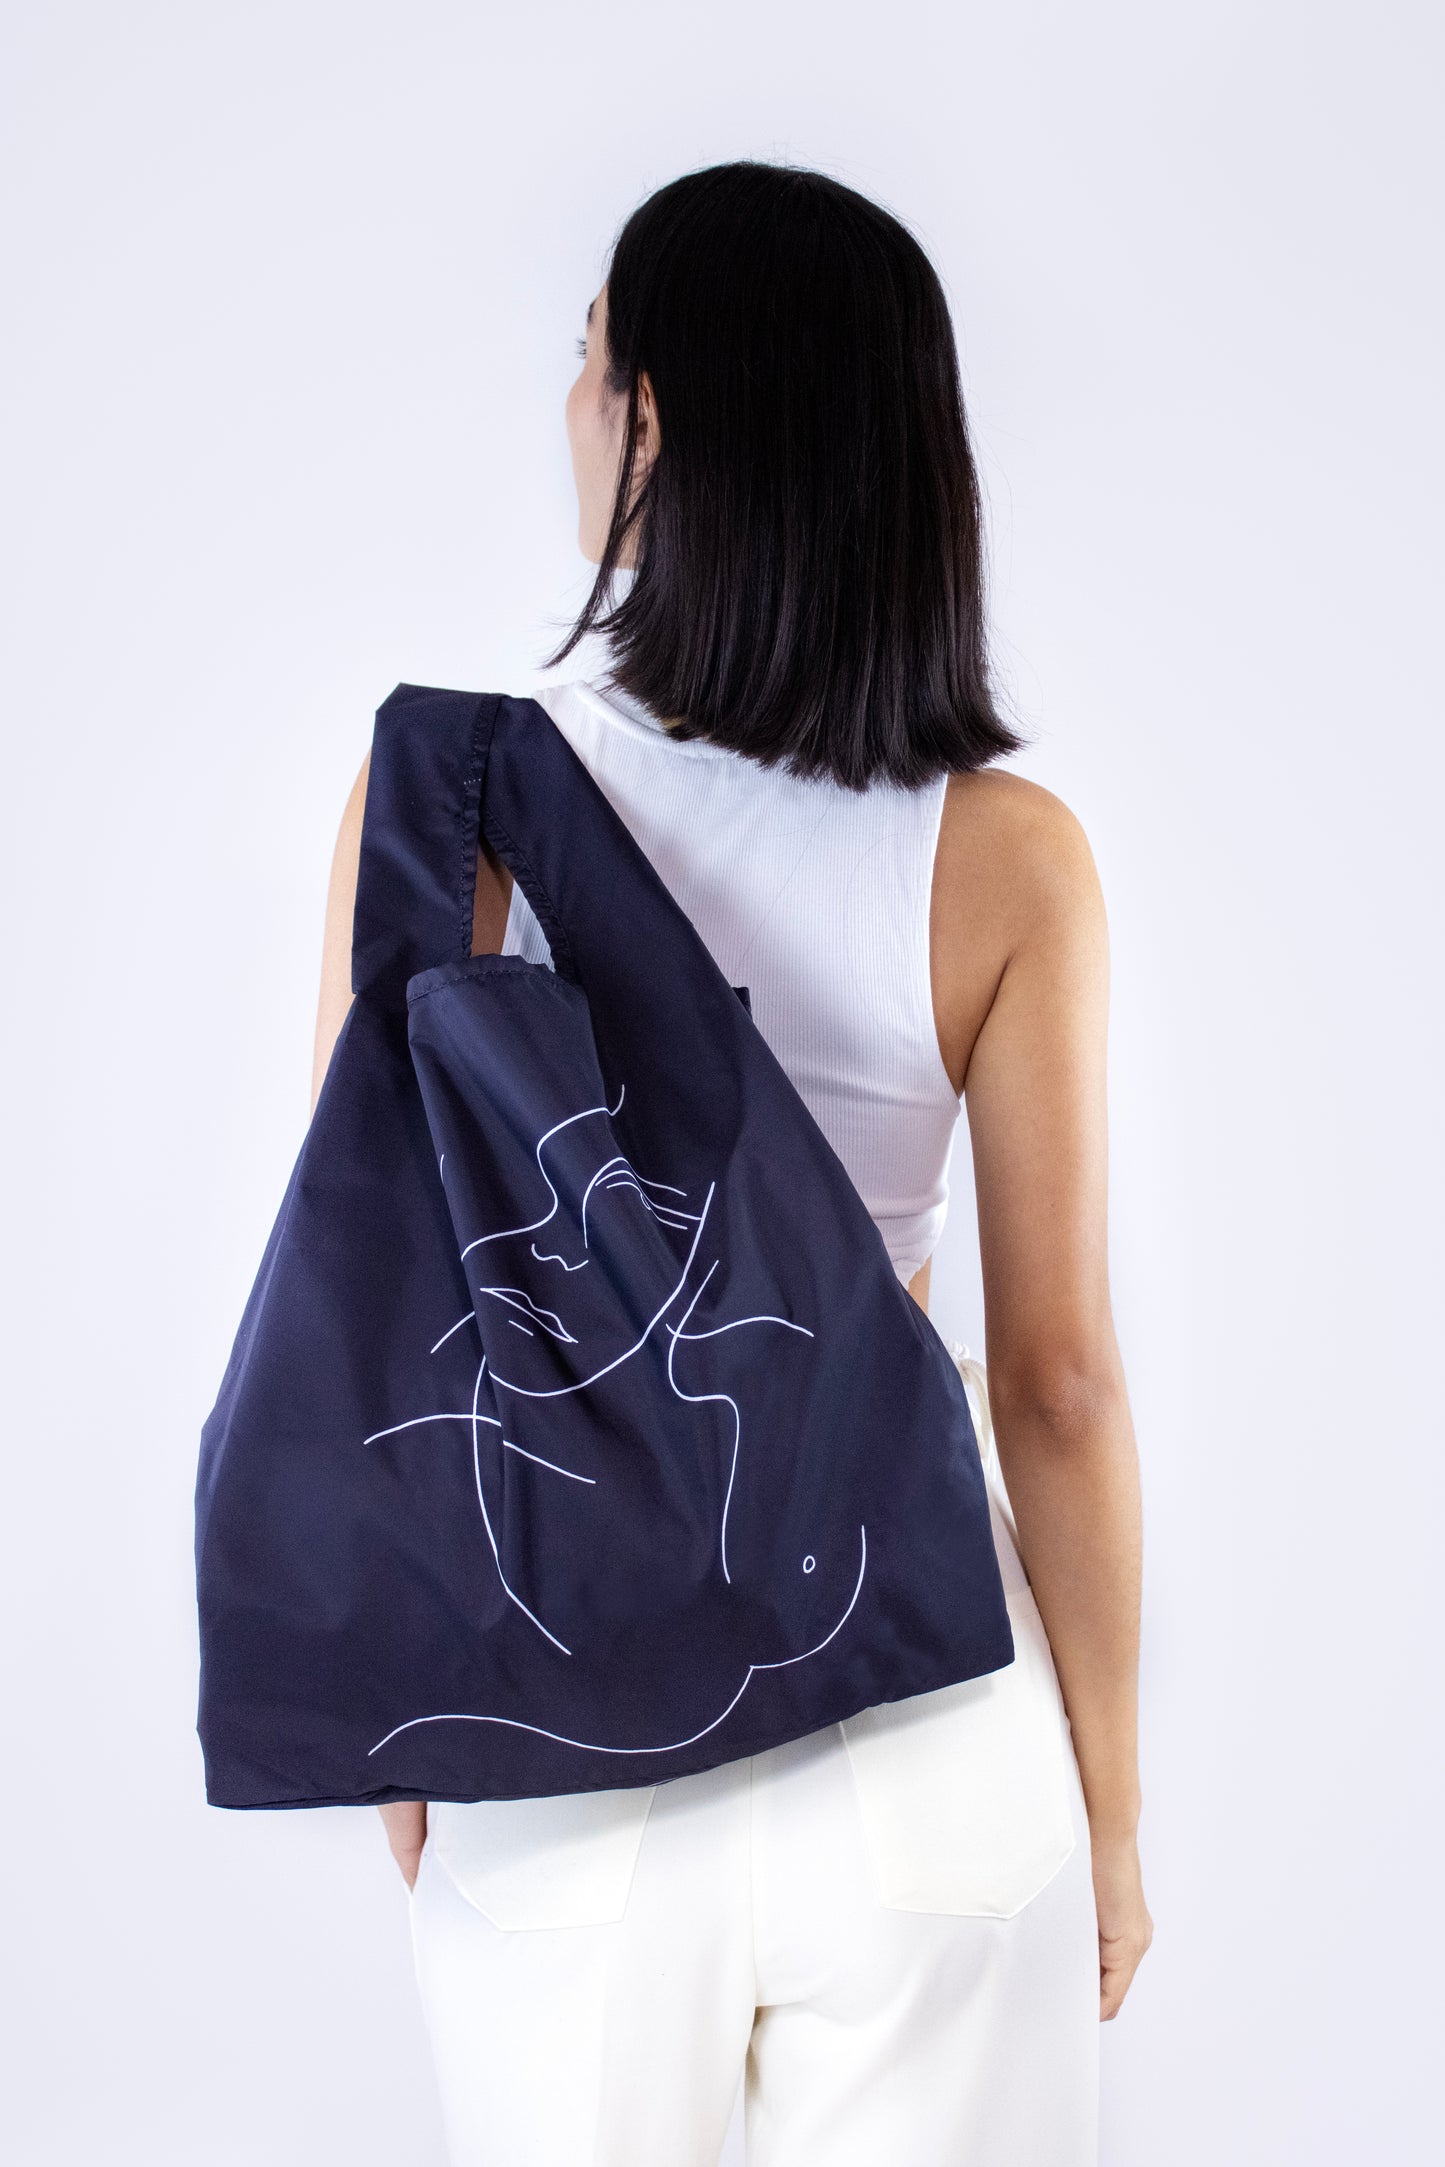 Kind Bag Recycled Plastic Reusable Bag Kit Agar Elsbeth Singapore